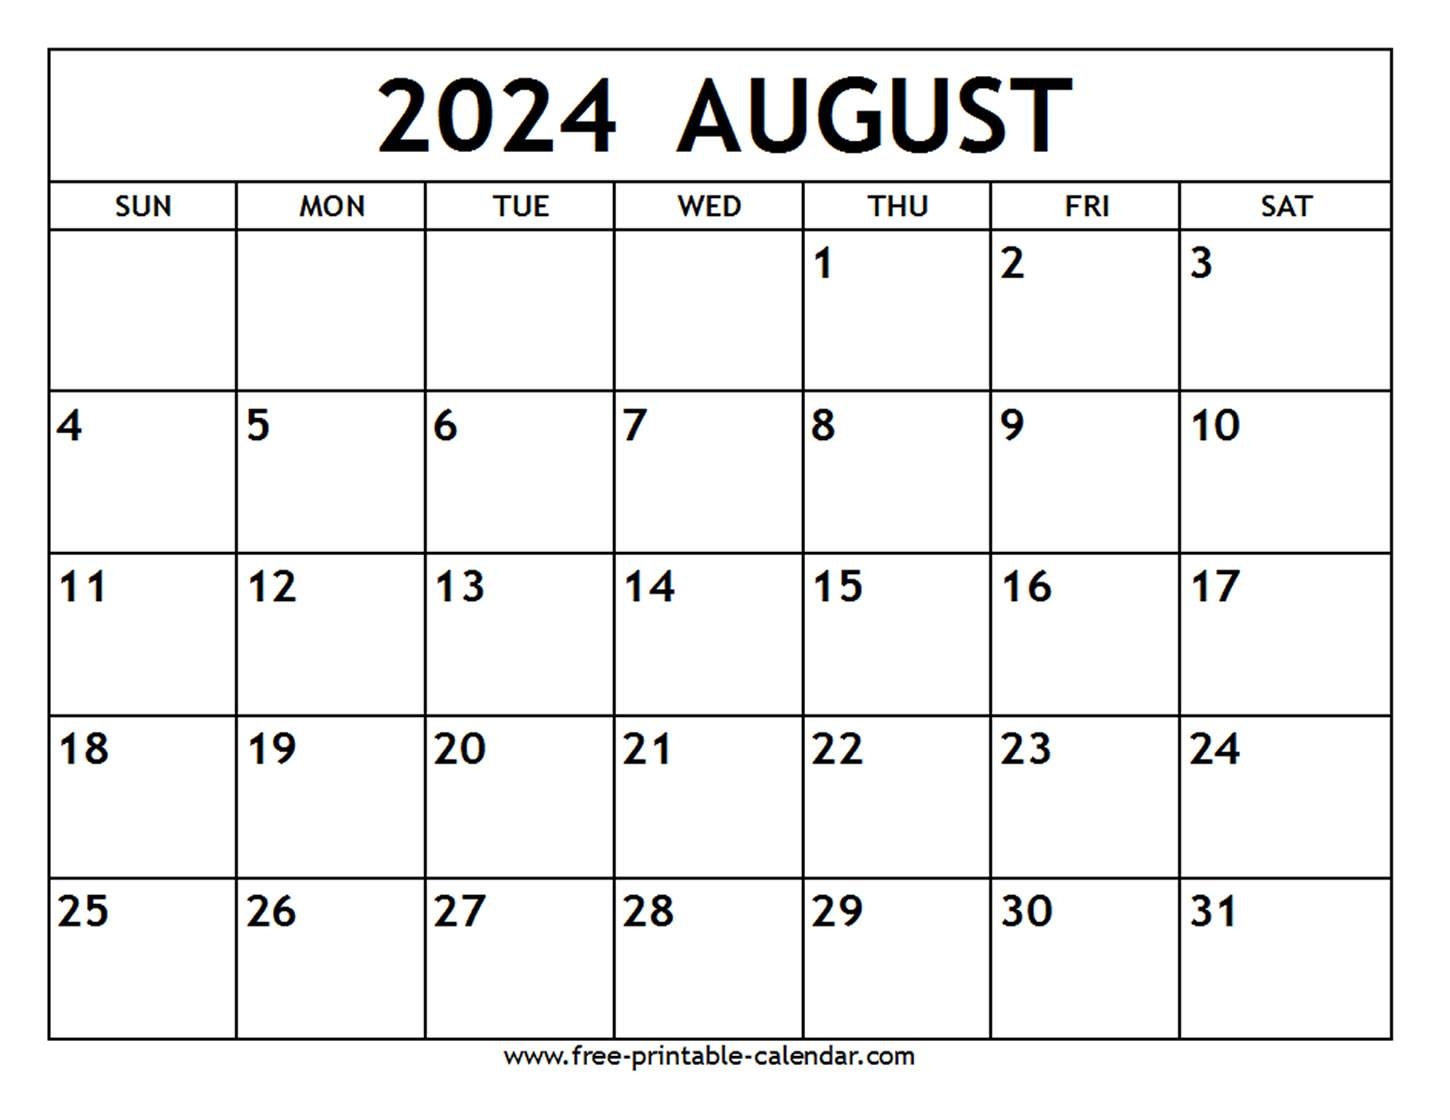 August 2024 Calendar - Free-Printable-Calendar throughout Free Printable Calendar Aug 2024